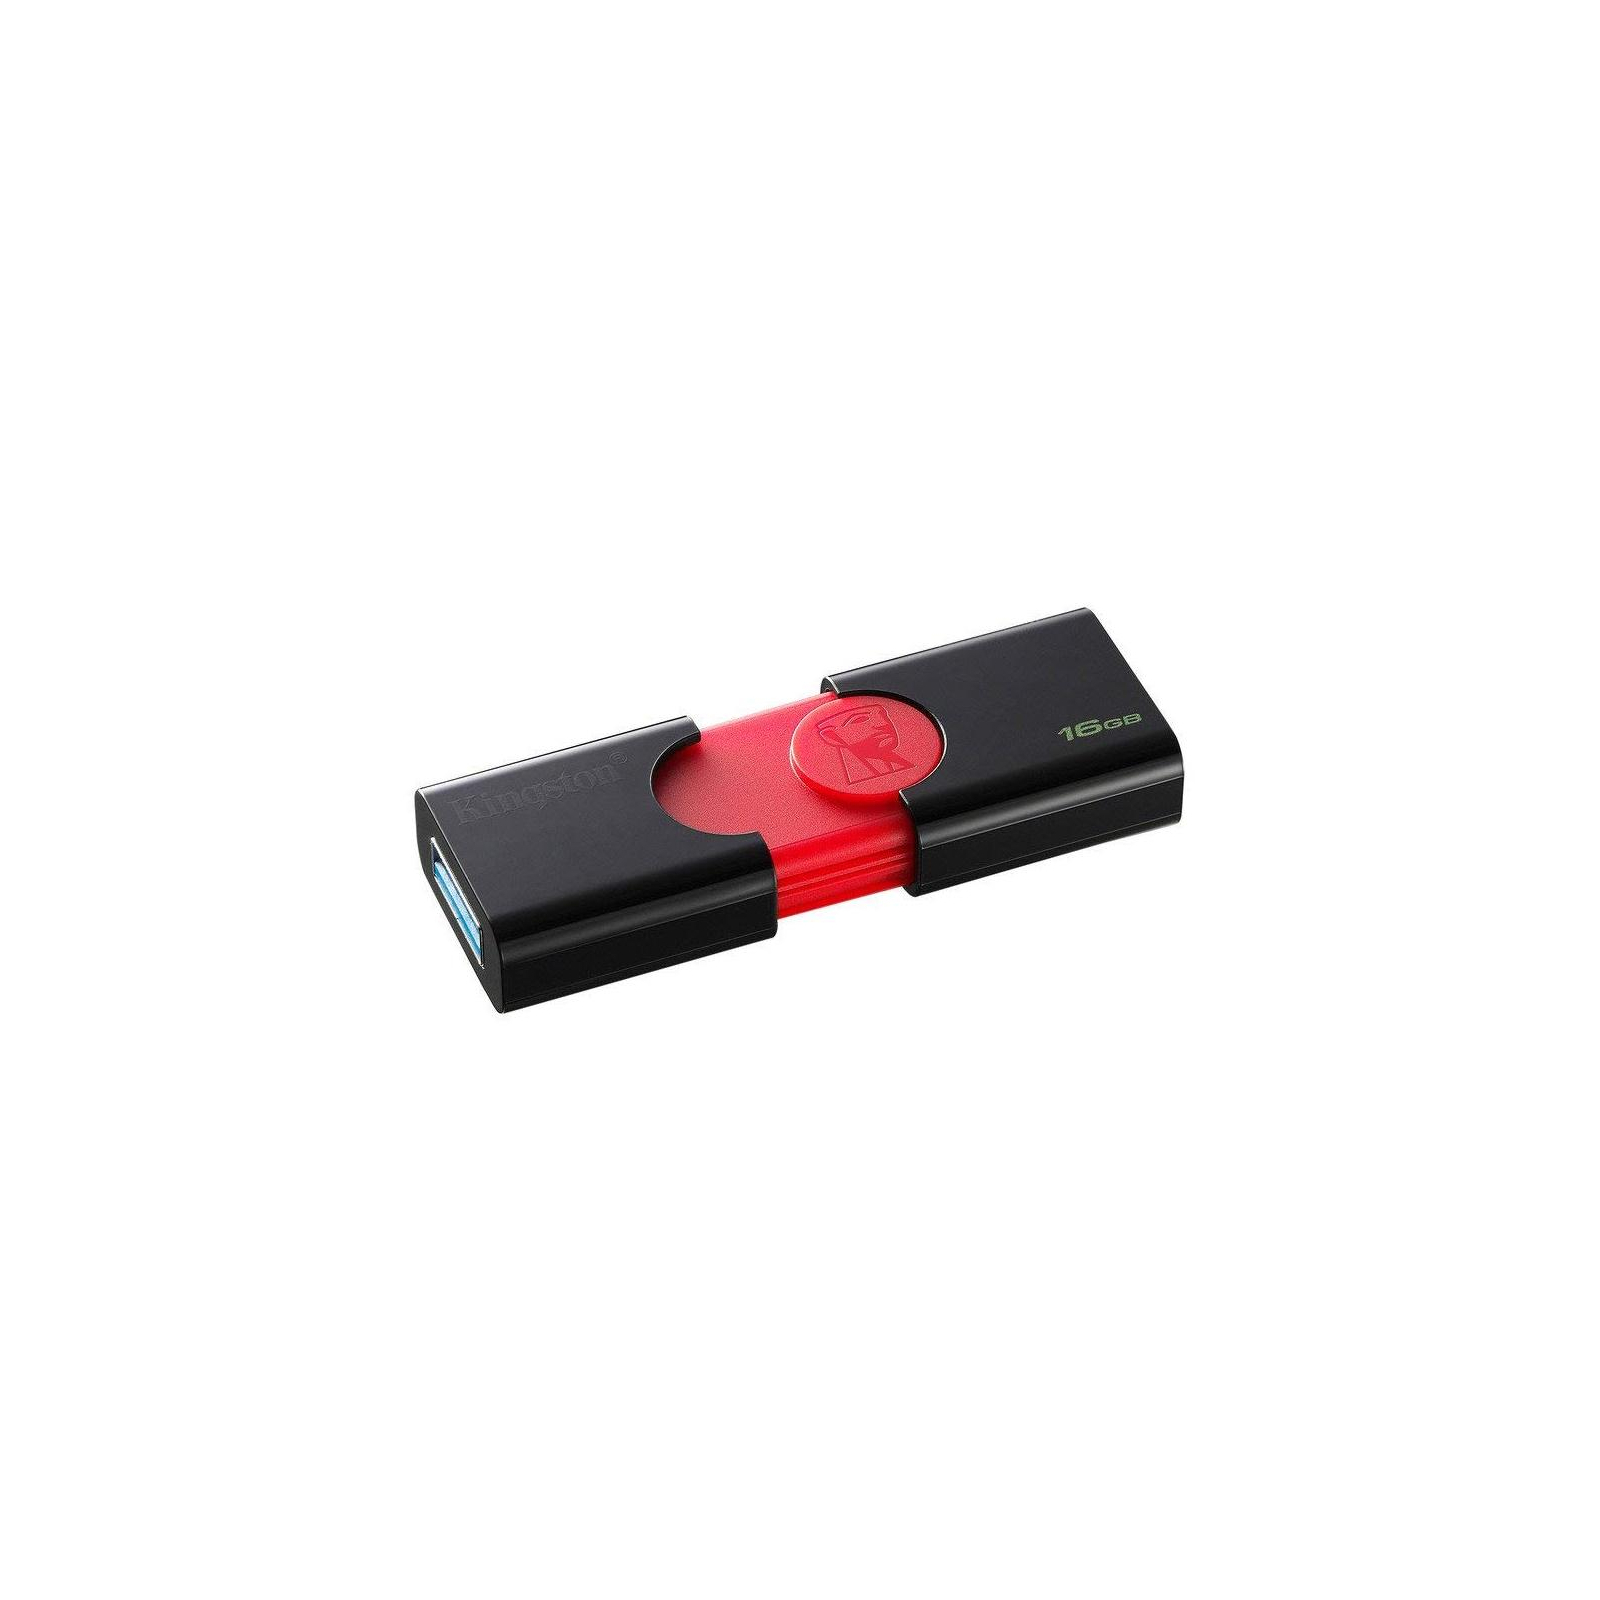 USB флеш накопитель Kingston 16GB DT106 USB 3.0 (DT106/16GB) изображение 5